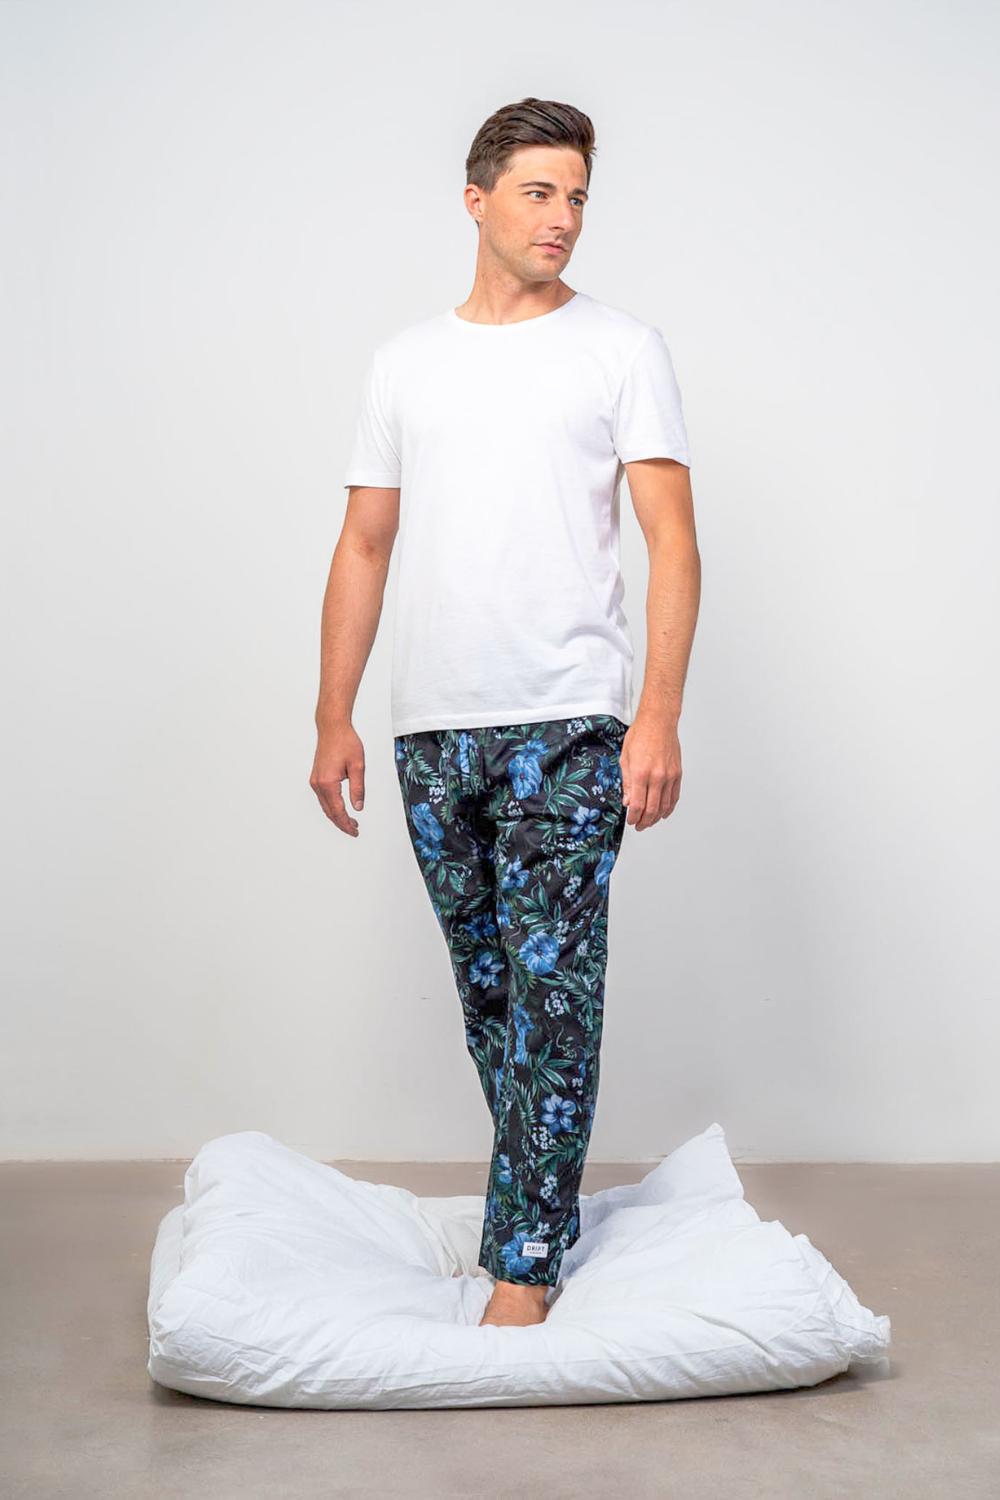 Men's midsummer pyjama bottoms for men worn by model